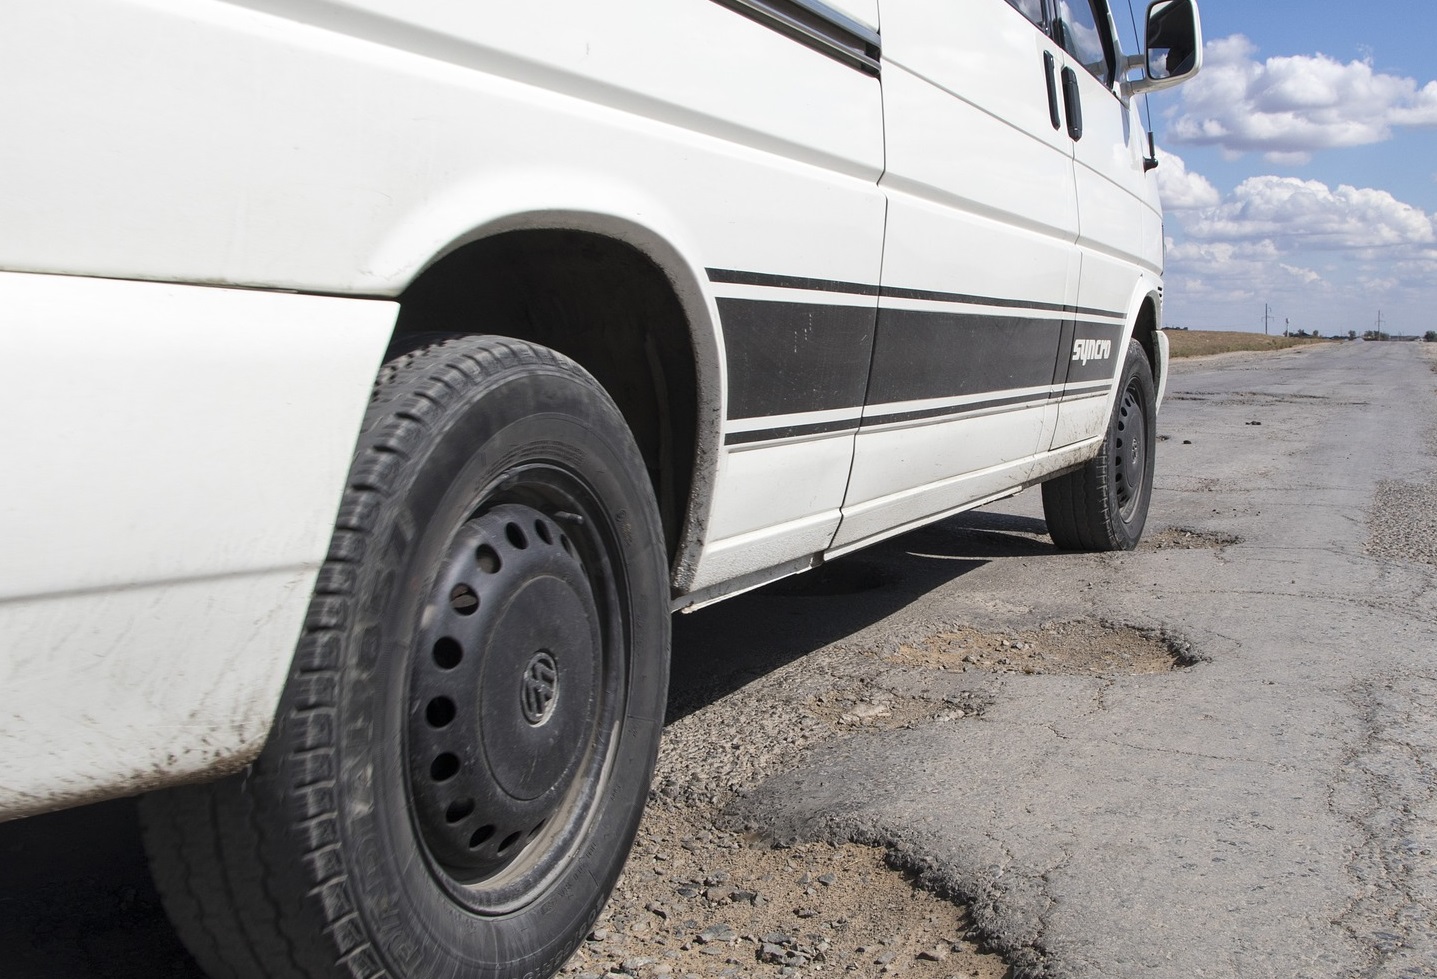 Steer Clear of Potholes | Car Insurance Blog | Hippo.co.za